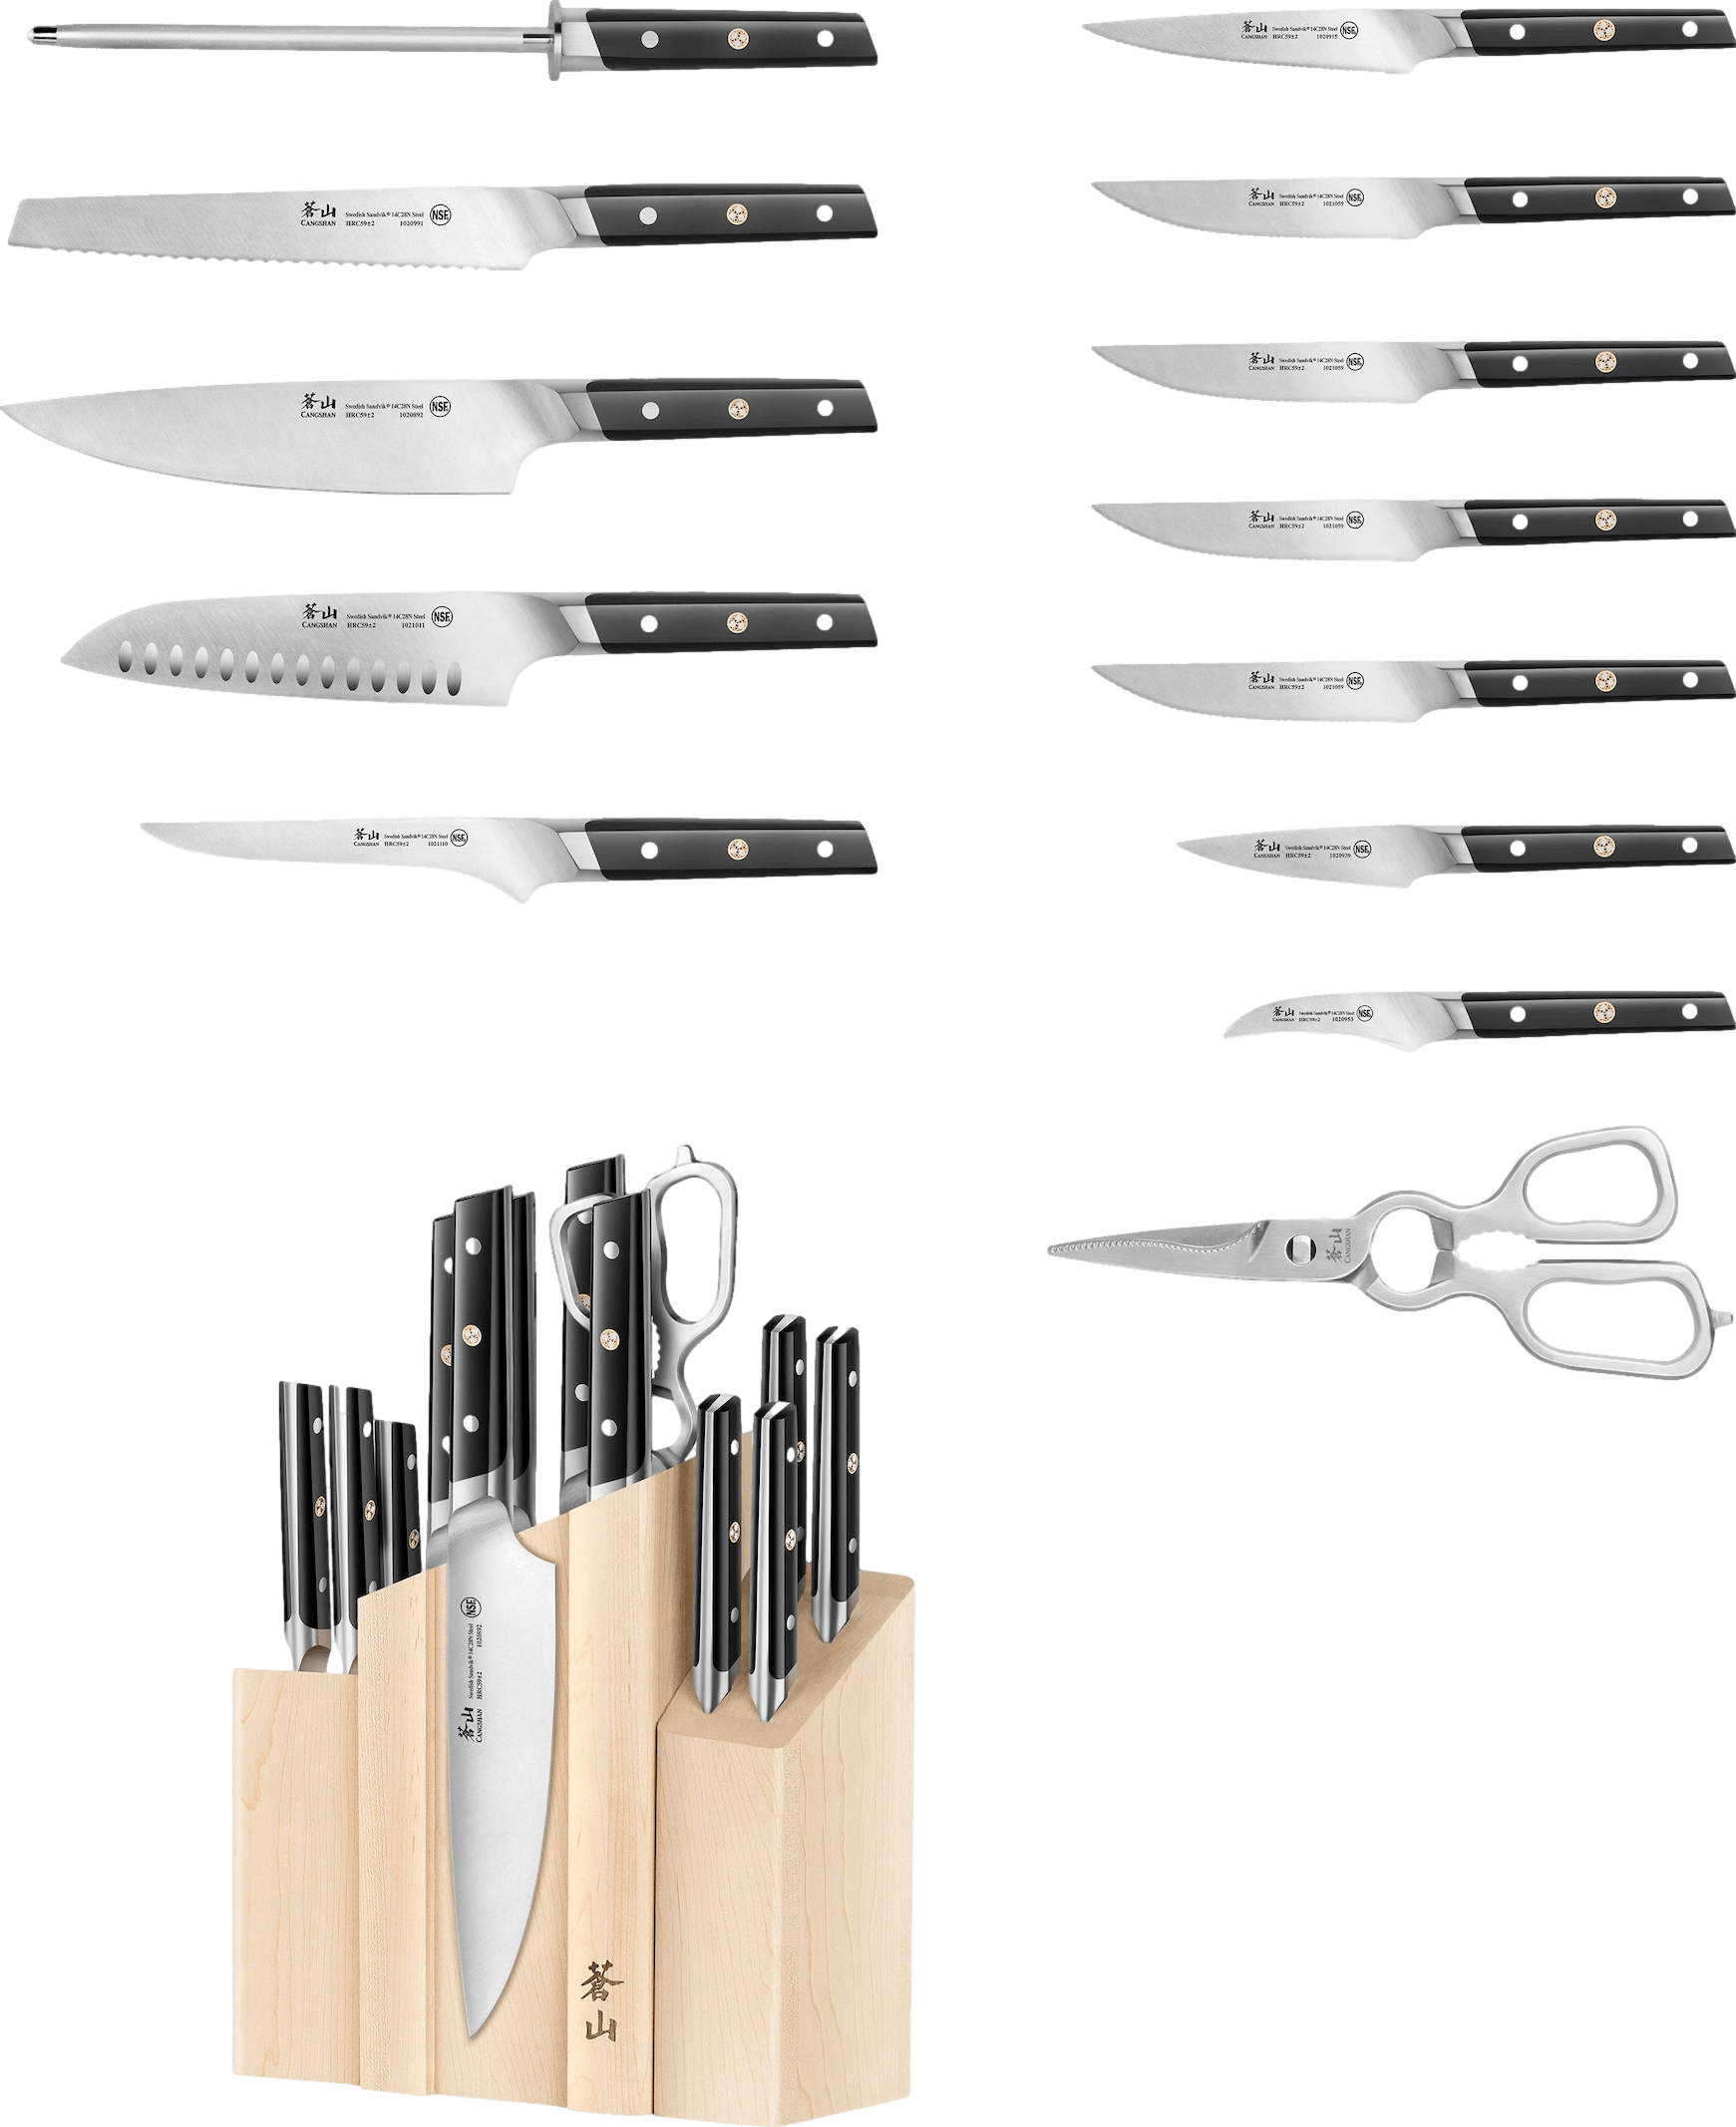 Lamson 10-Piece Premier Forged Knife Block Set